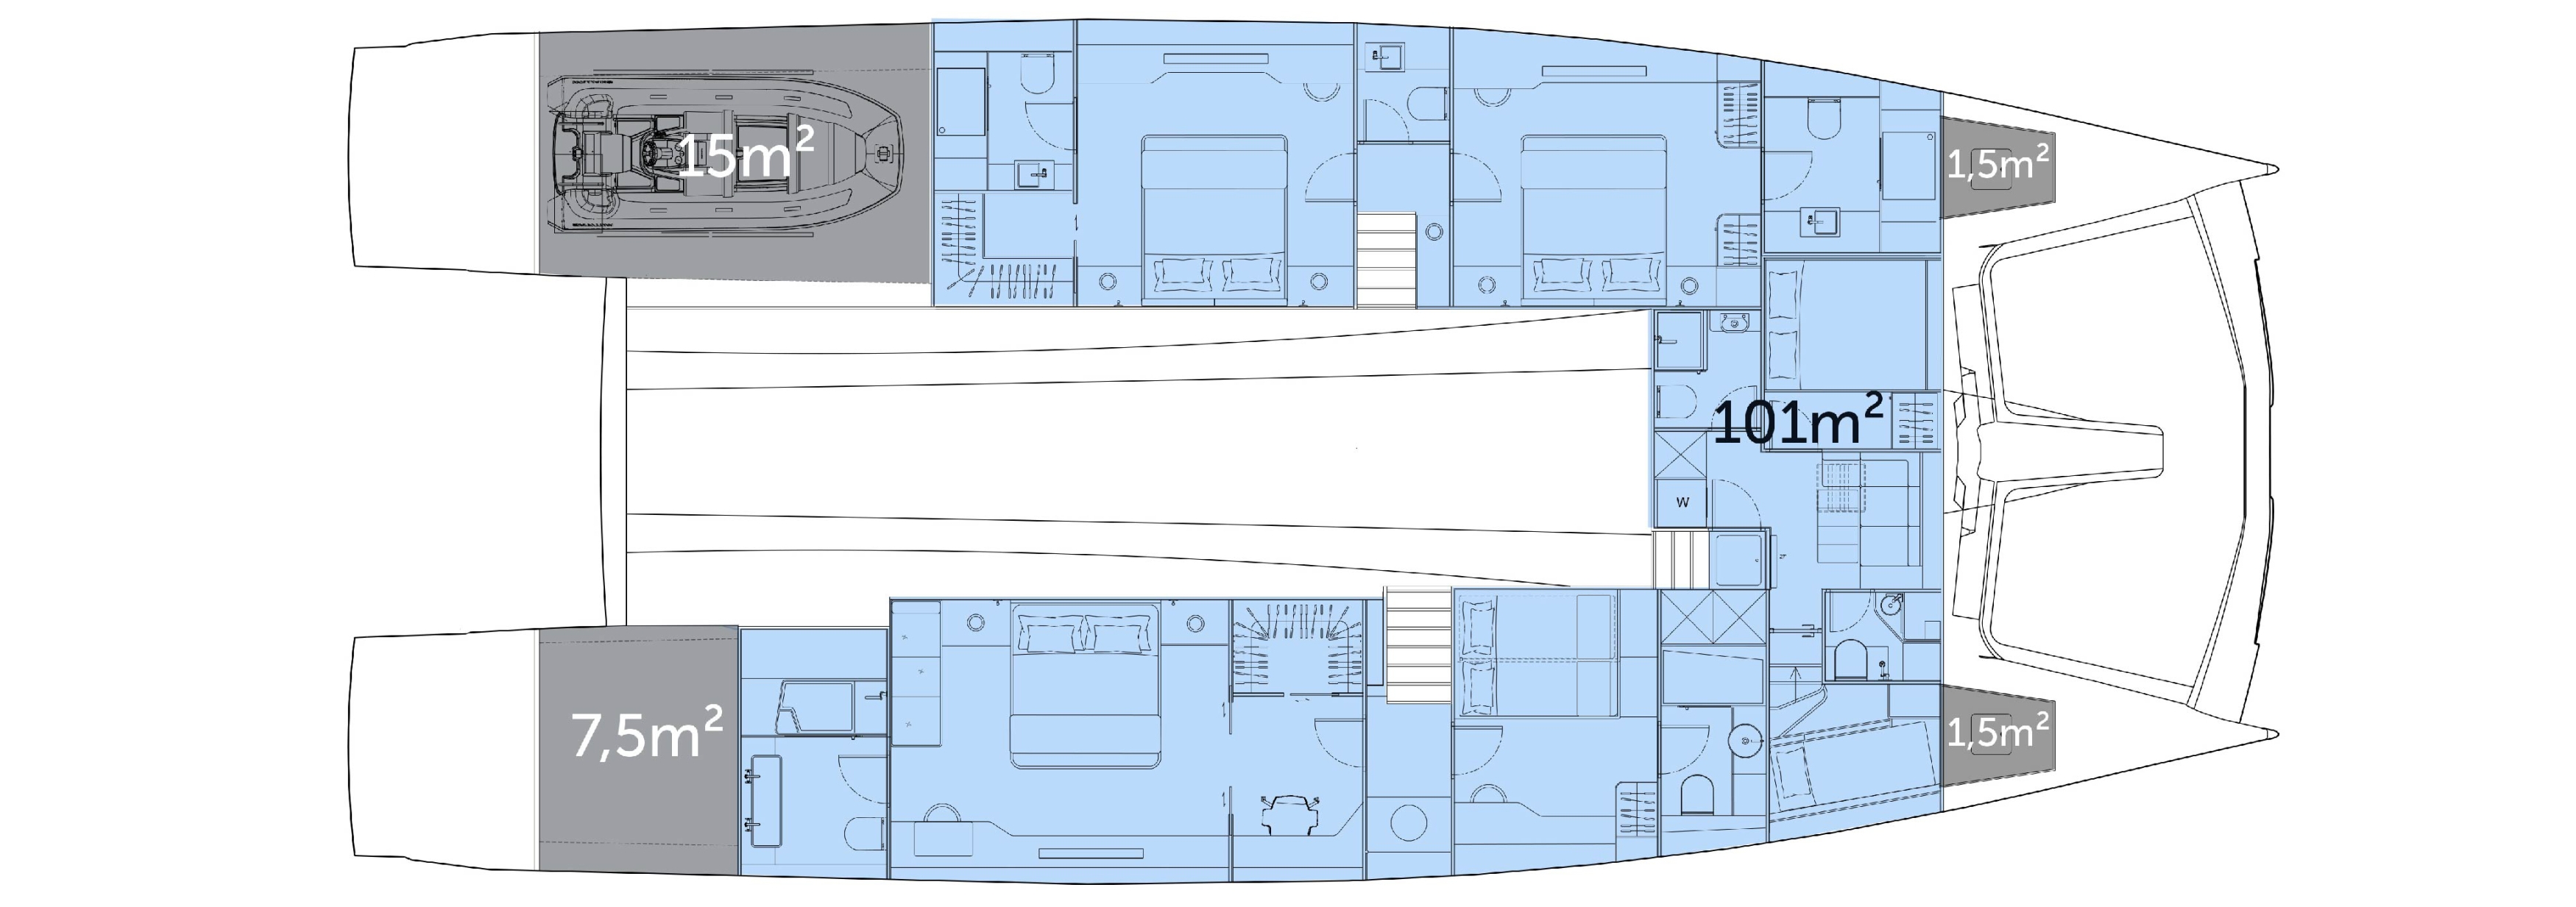 Silent 80 catamaran 6 cabins lower deck area plan